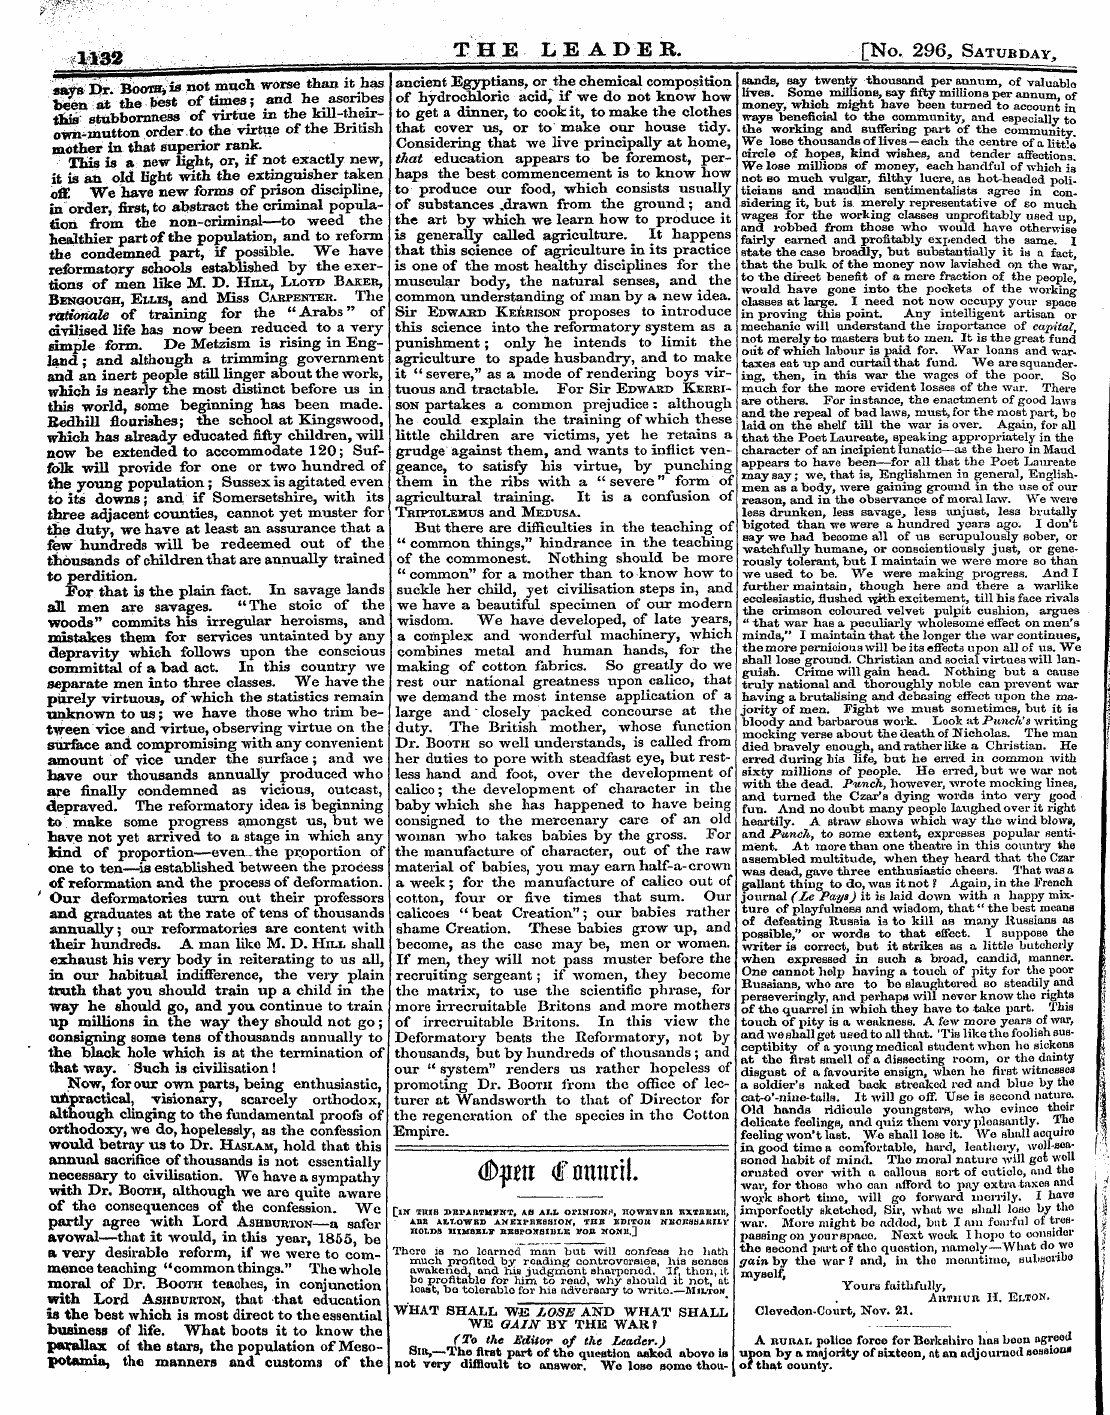 Leader (1850-1860): jS F Y, 2nd edition - J^«K The Leader. [No, 296, Satubday